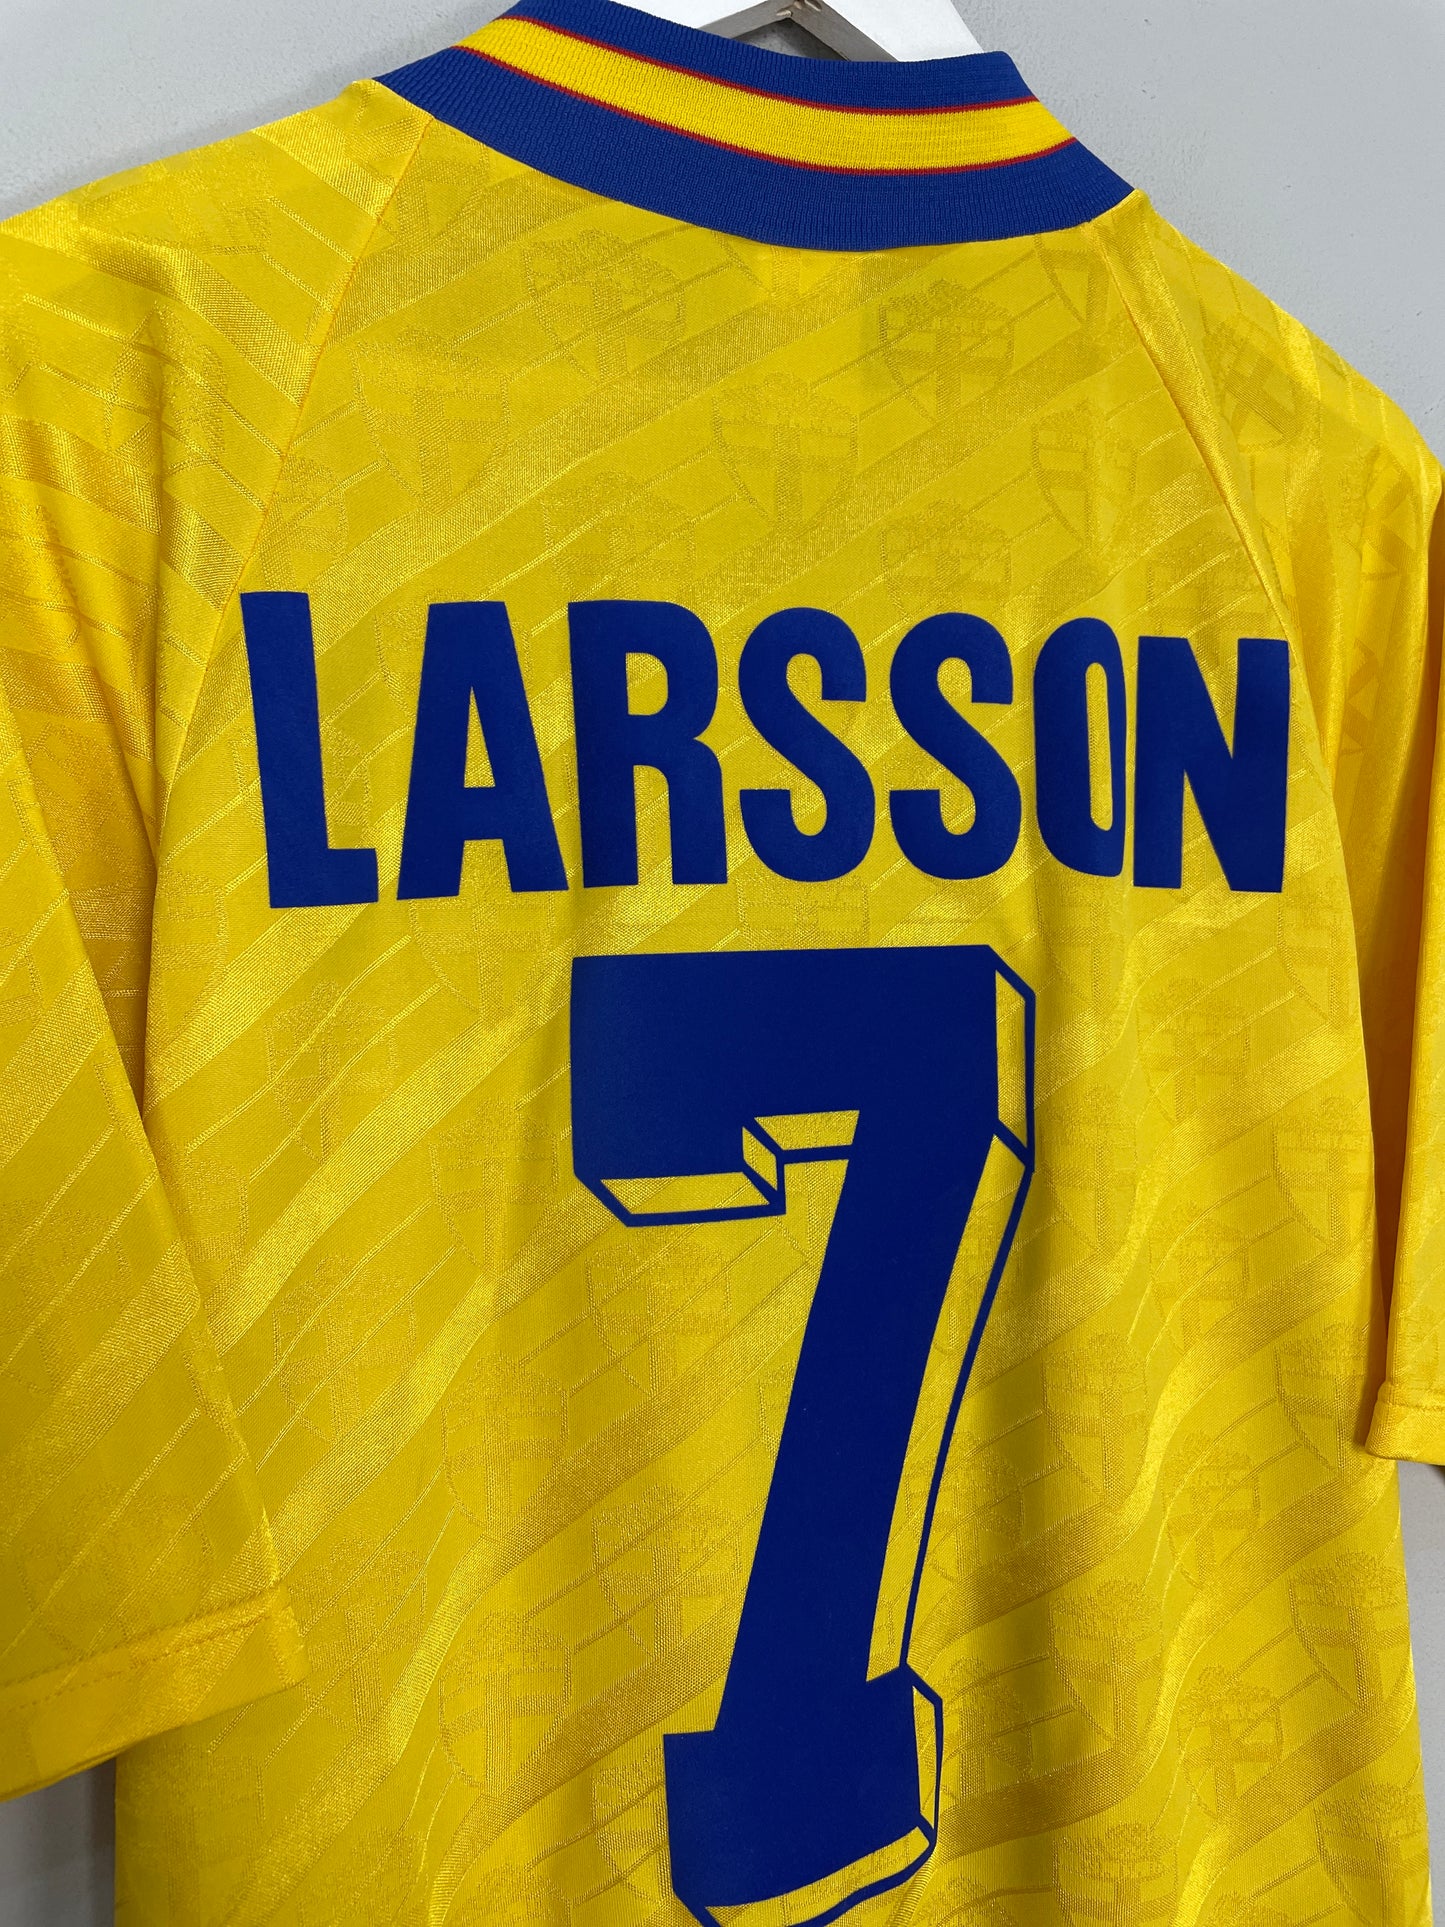 1994/95 SWEDEN LARSSON #7 HOME SHIRT (L) ADIDAS